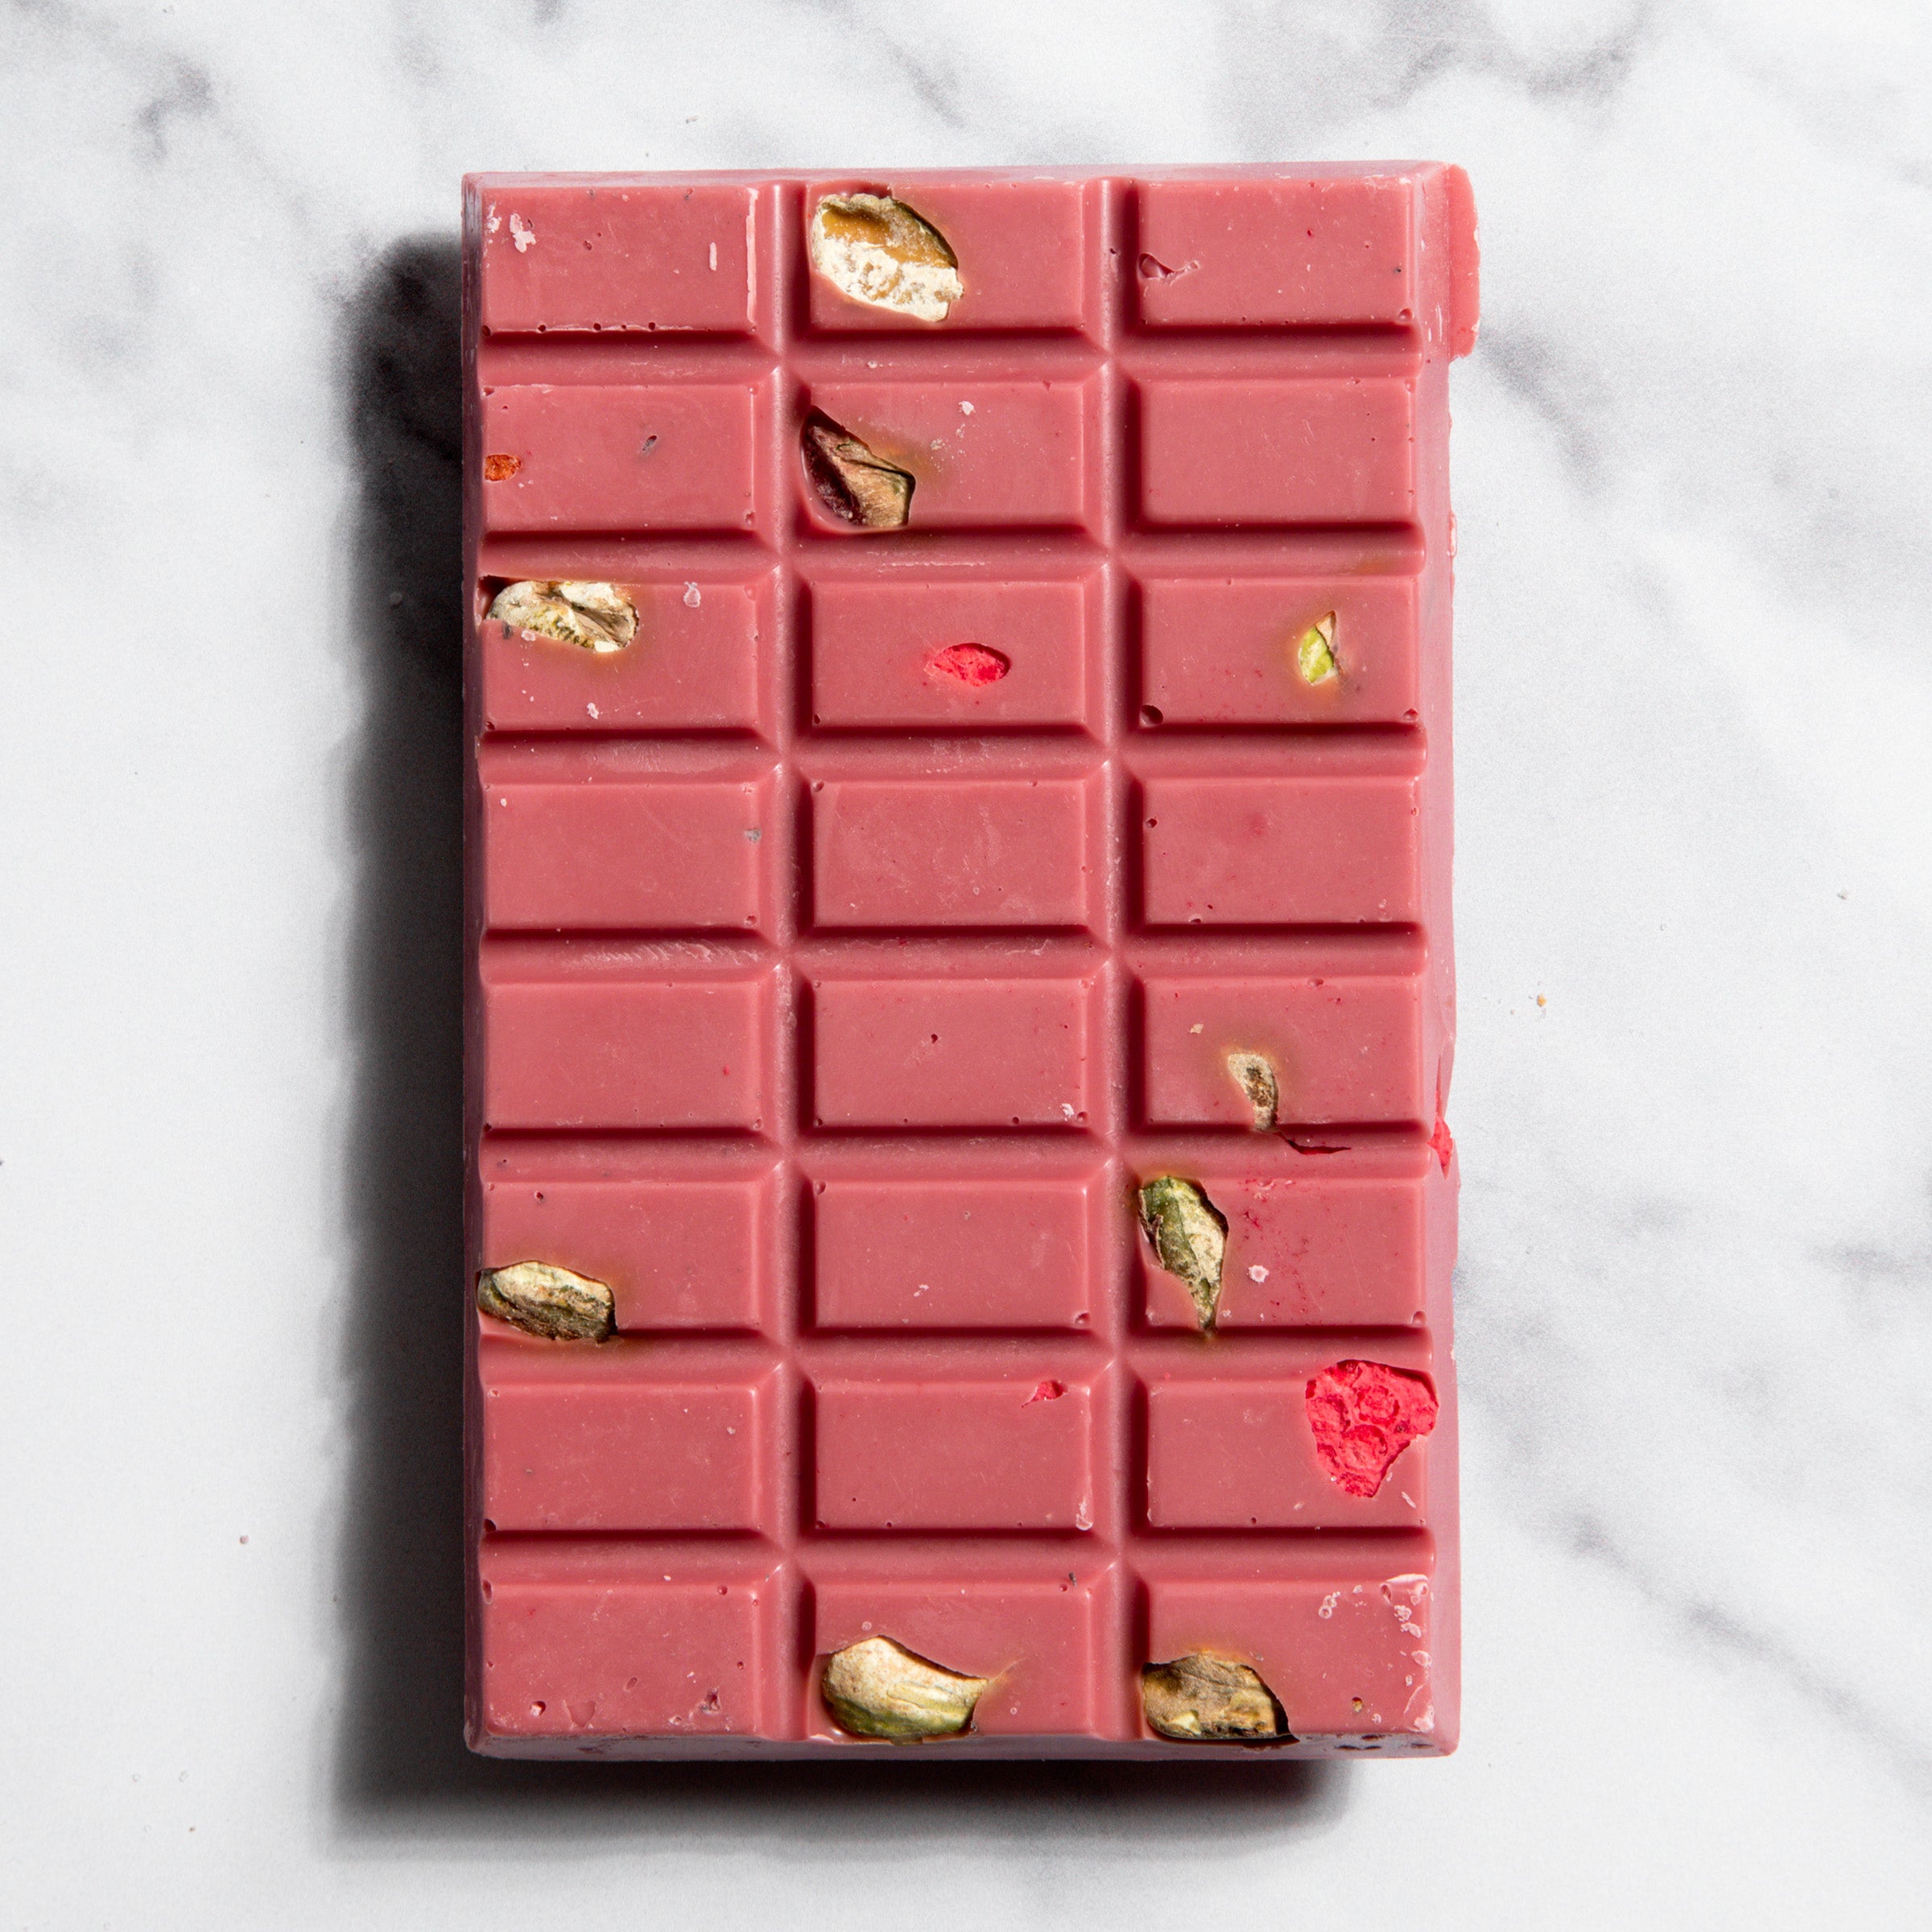 Ruby Raspberry & Pistachio Chocolate Bar, 3.5 oz, Charles Chocolates